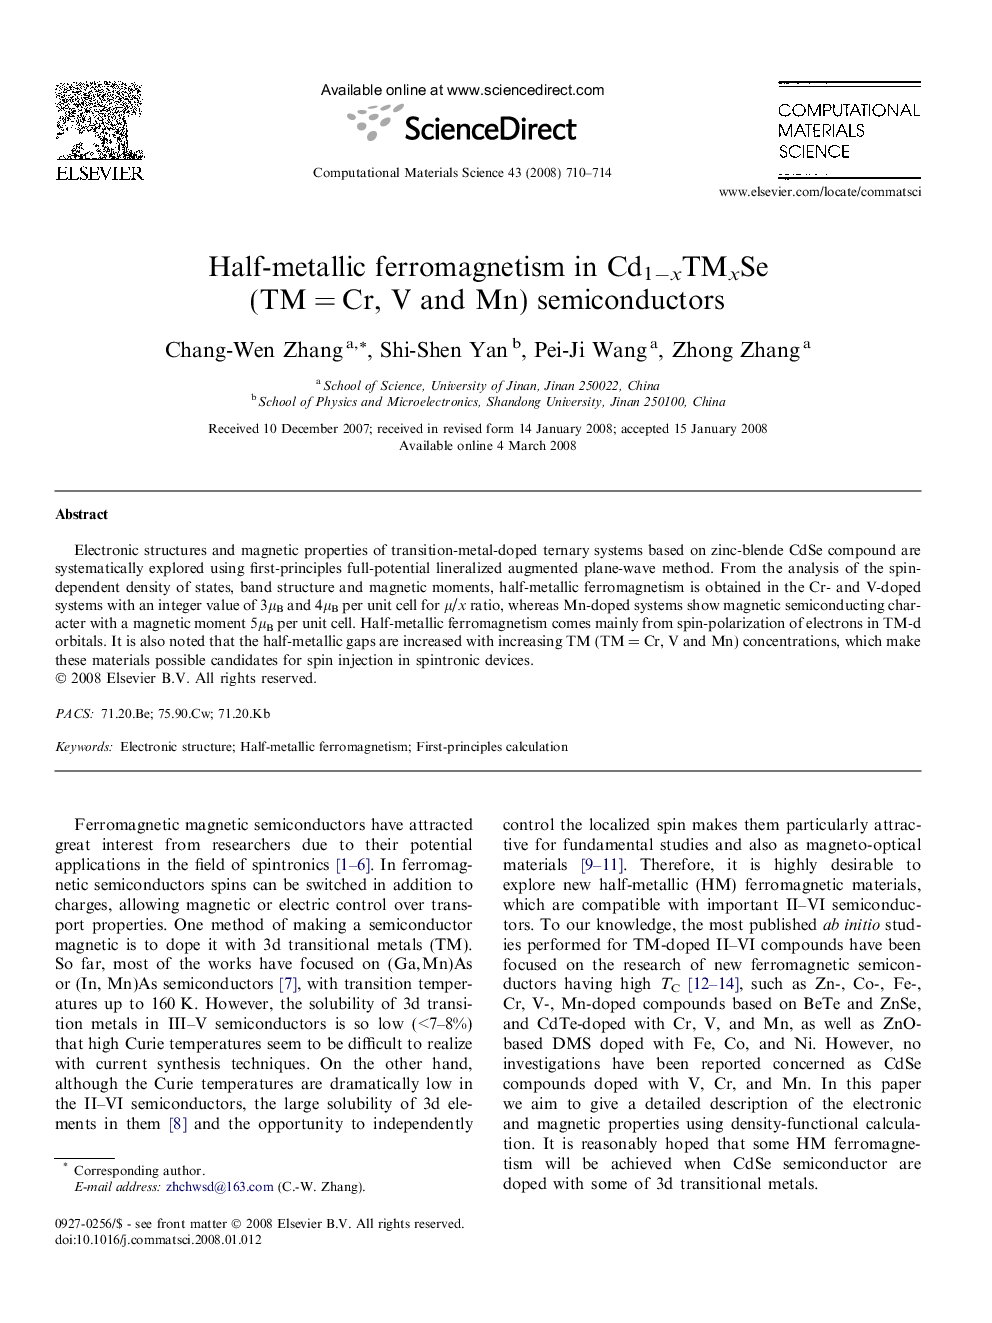 Half-metallic ferromagnetism in Cd1âxTMxSe (TMÂ =Â Cr, V and Mn) semiconductors